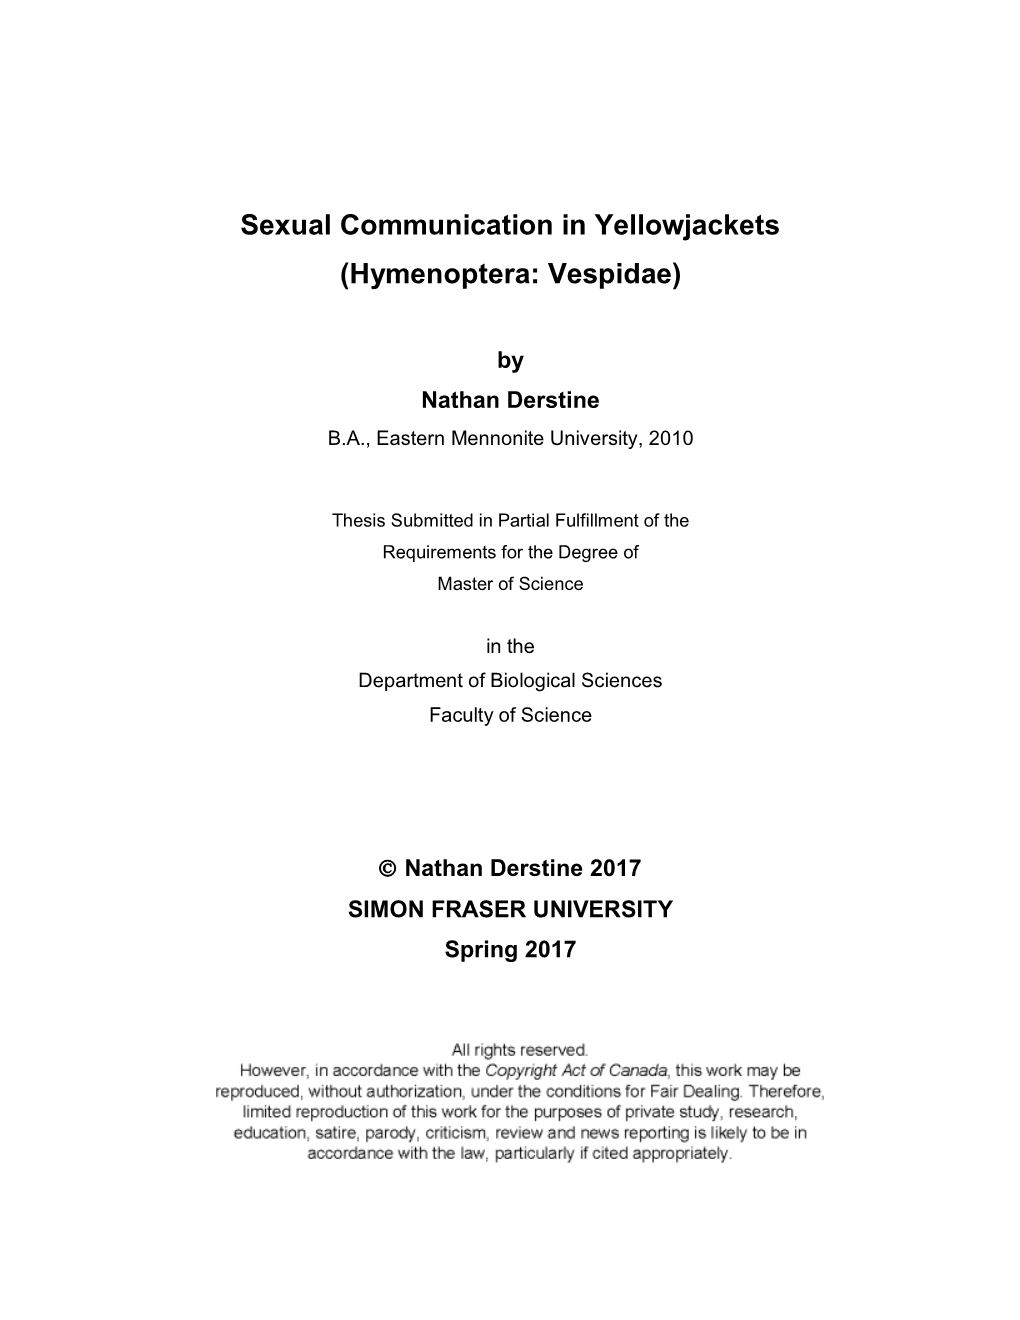 Sexual Communication in Yellowjackets (Hymenoptera: Vespidae)